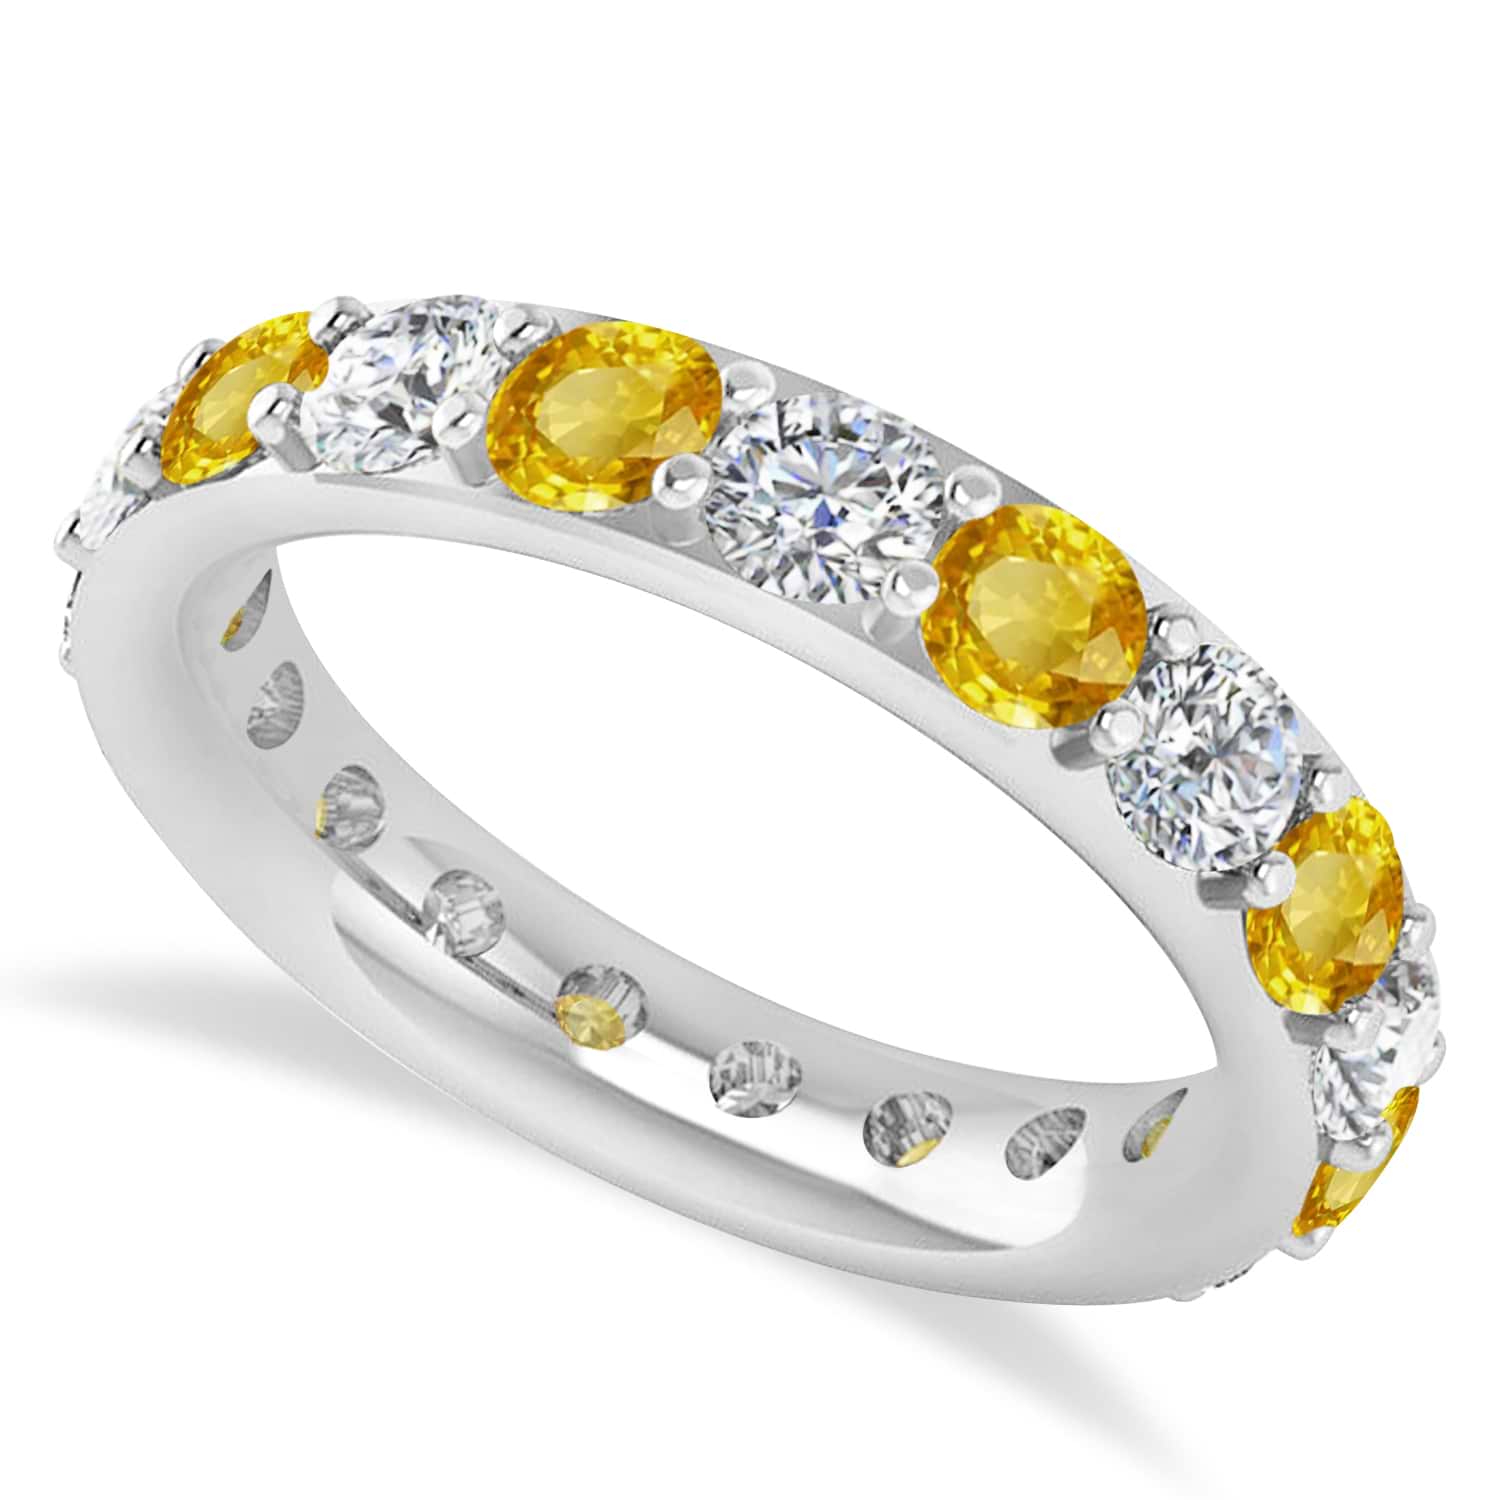 Diamond & Yellow Sapphire Eternity Wedding Band 14k White Gold (2.85ct)